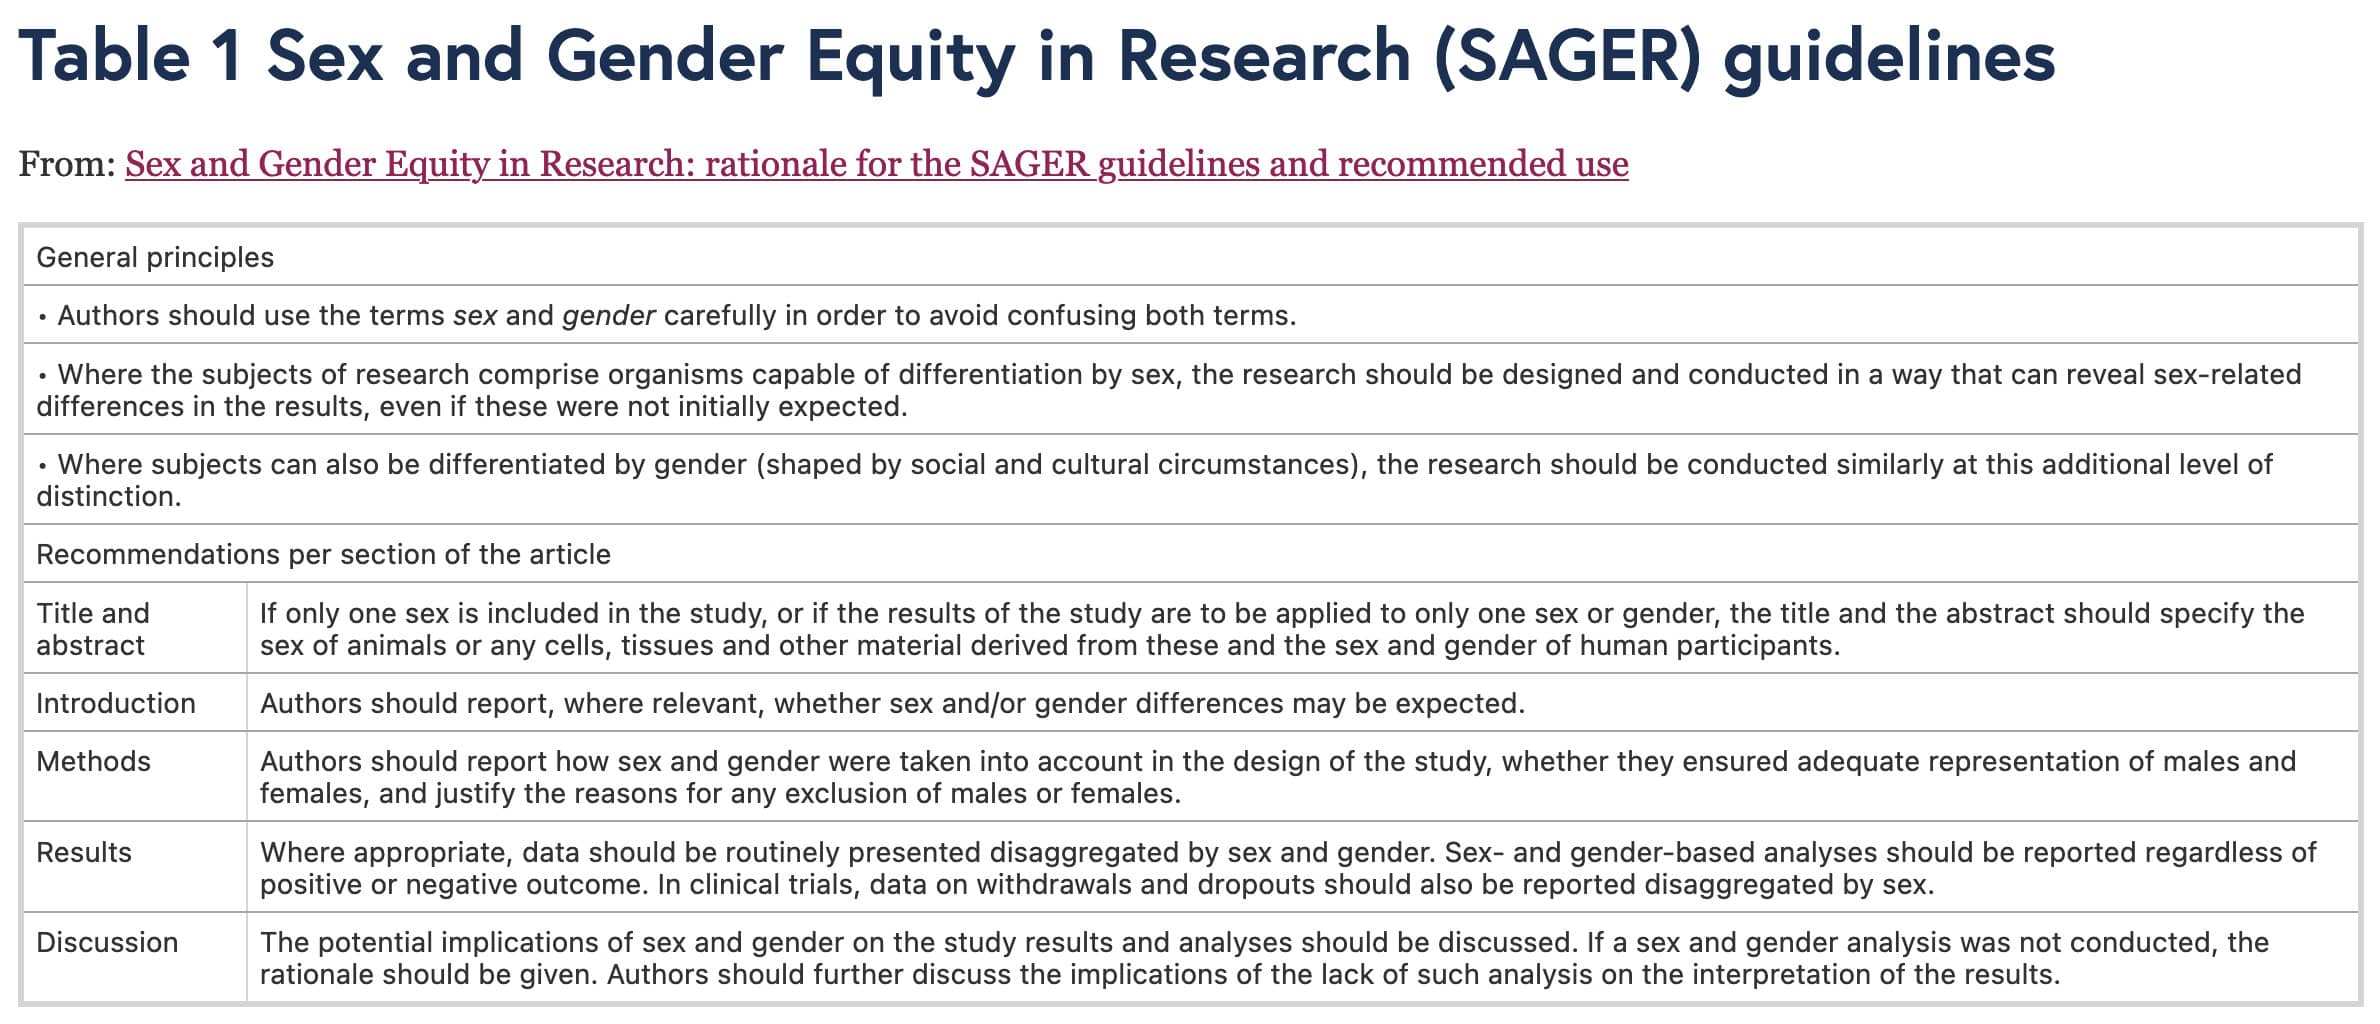  Heidari et al., 2016 - SAGER guidelines for sex and gender equity in research 